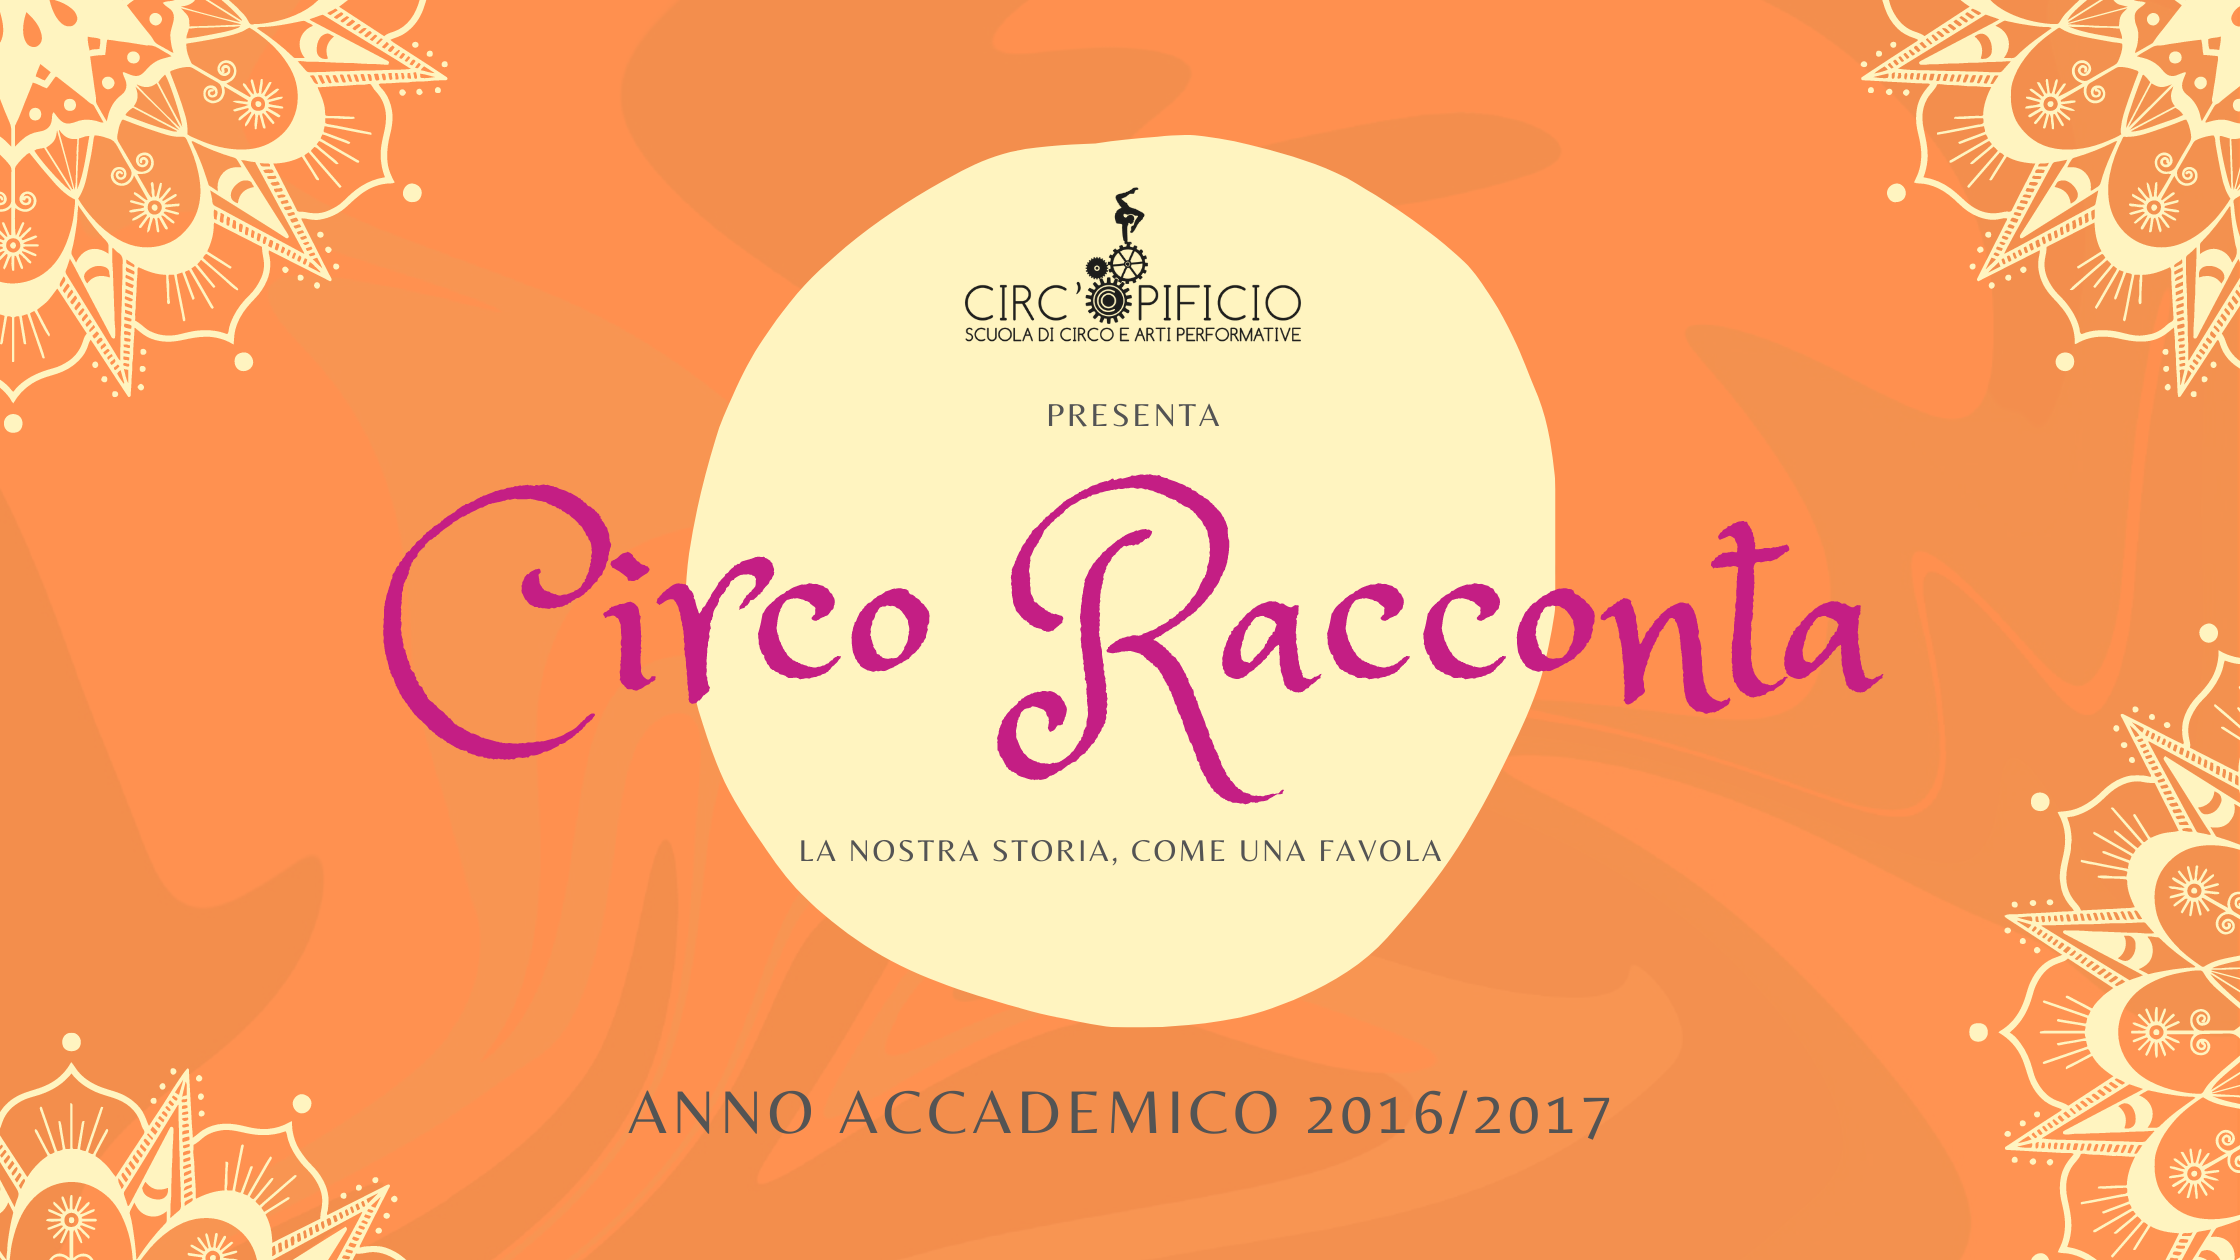 http://www.circopificio.it/wp-content/uploads/2020/12/Circo-Racconta-3.png